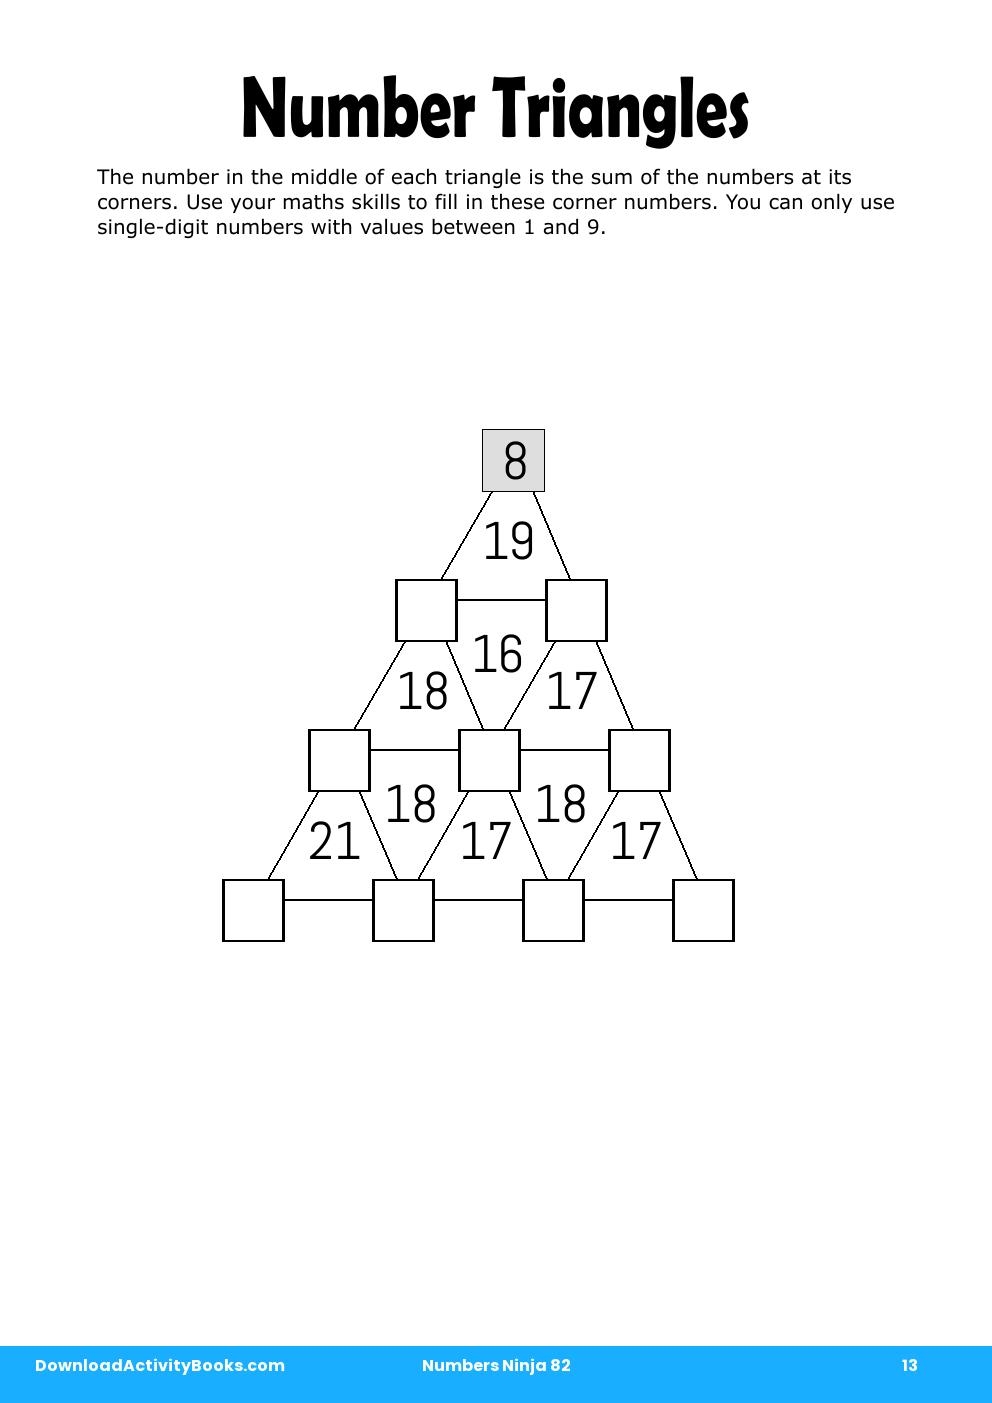 Number Triangles in Numbers Ninja 82